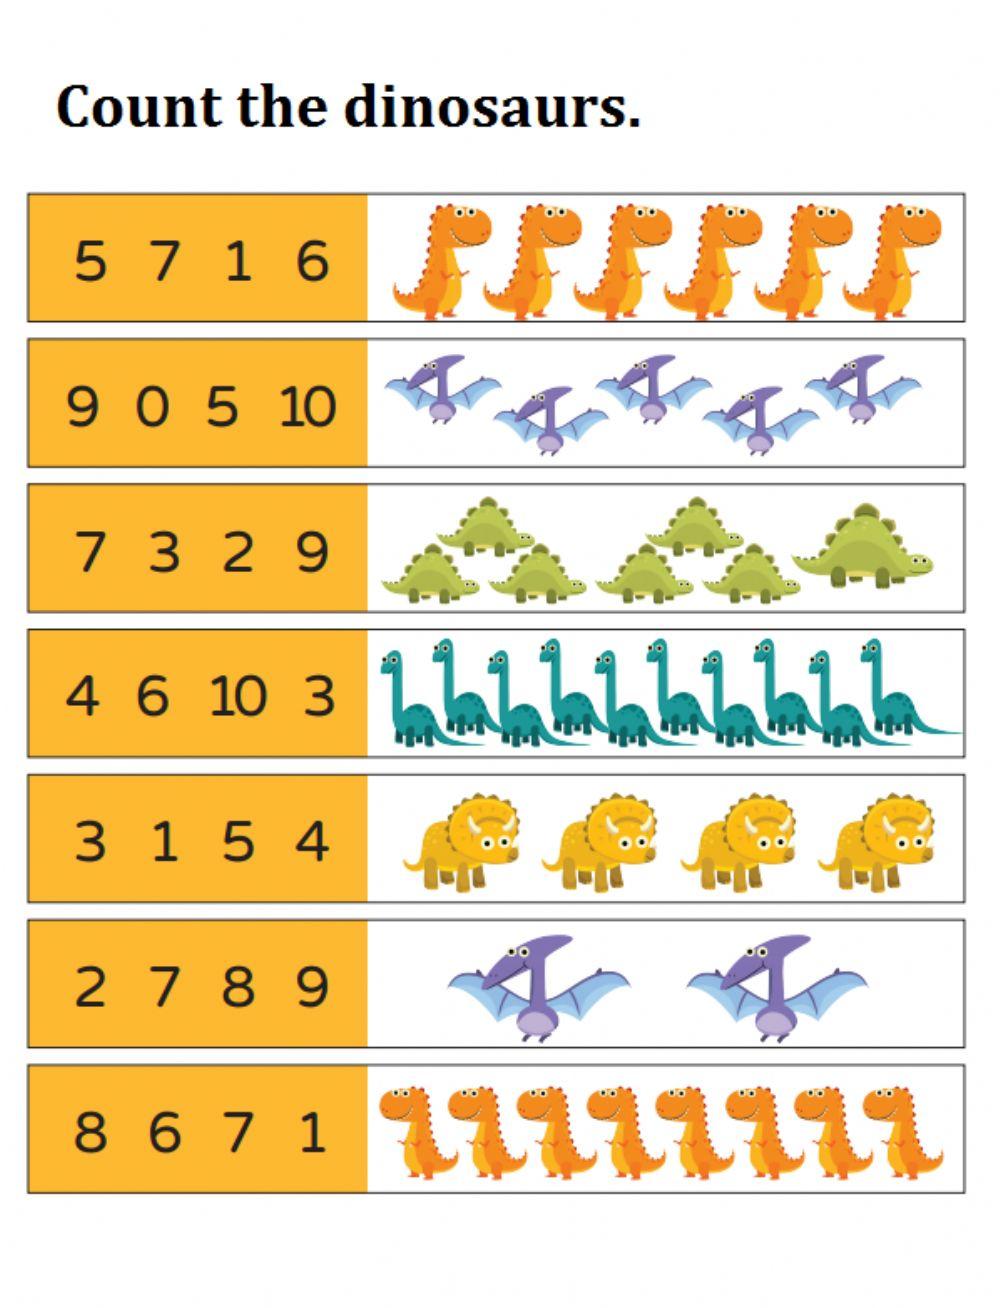 Dinosaur count